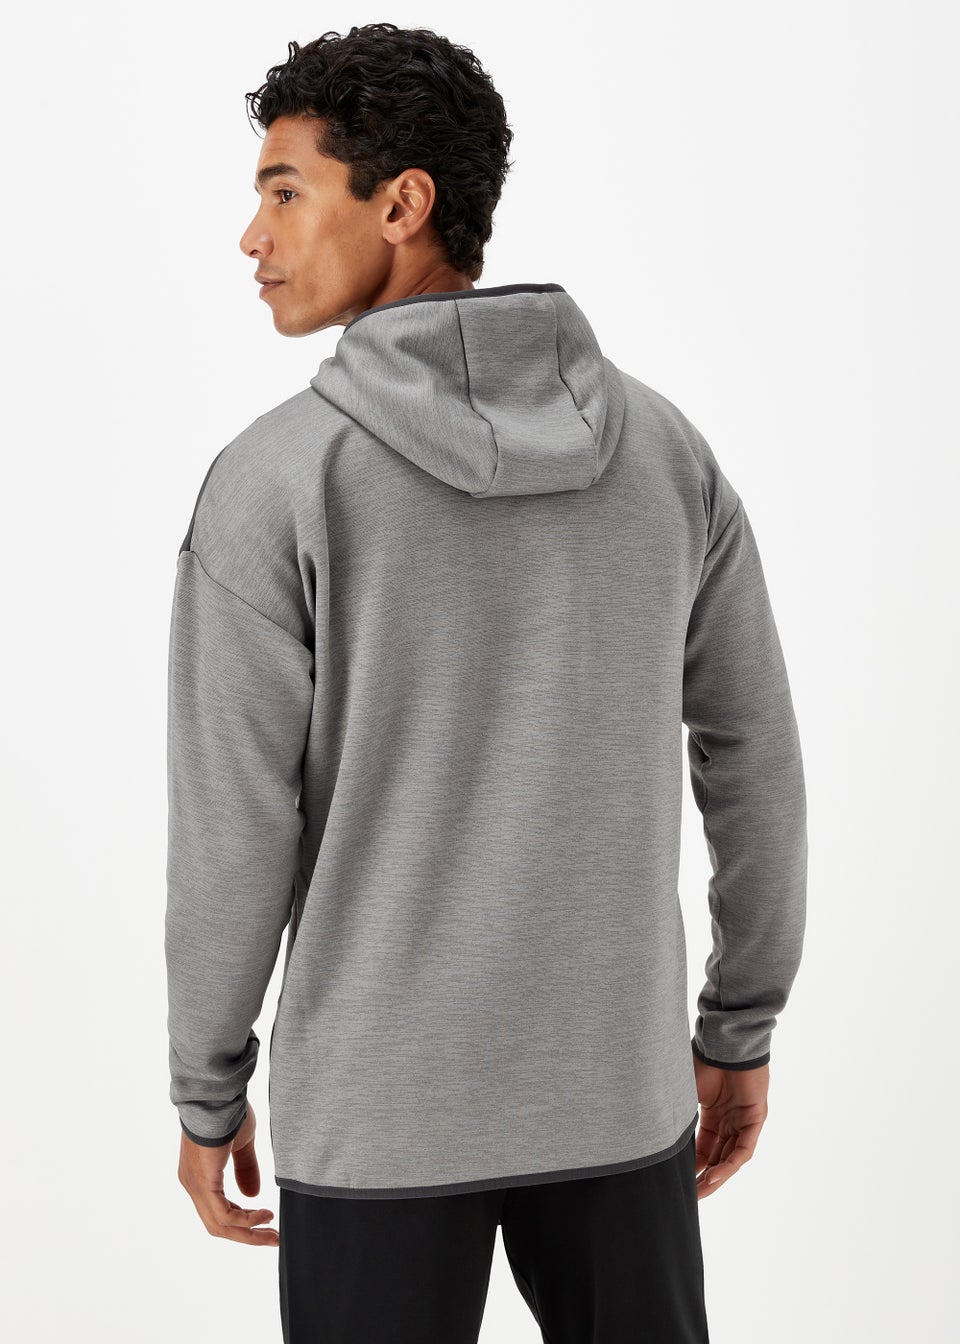 US Athletic Grey Co Ord Fleece